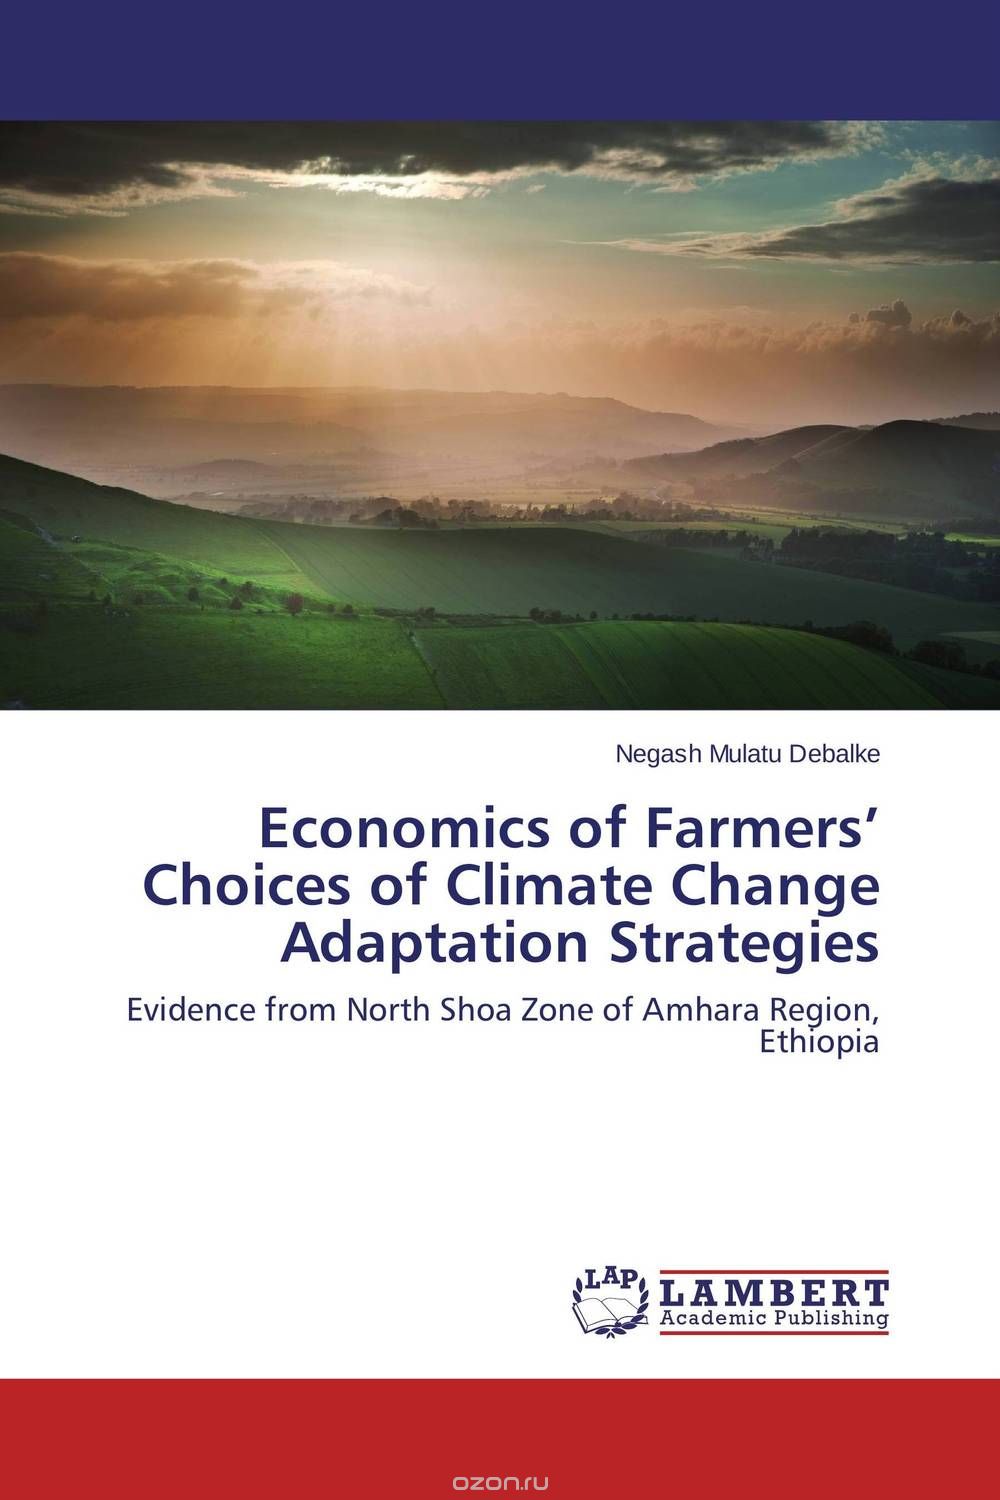 Скачать книгу "Economics of Farmers’ Choices of Climate Change Adaptation Strategies"